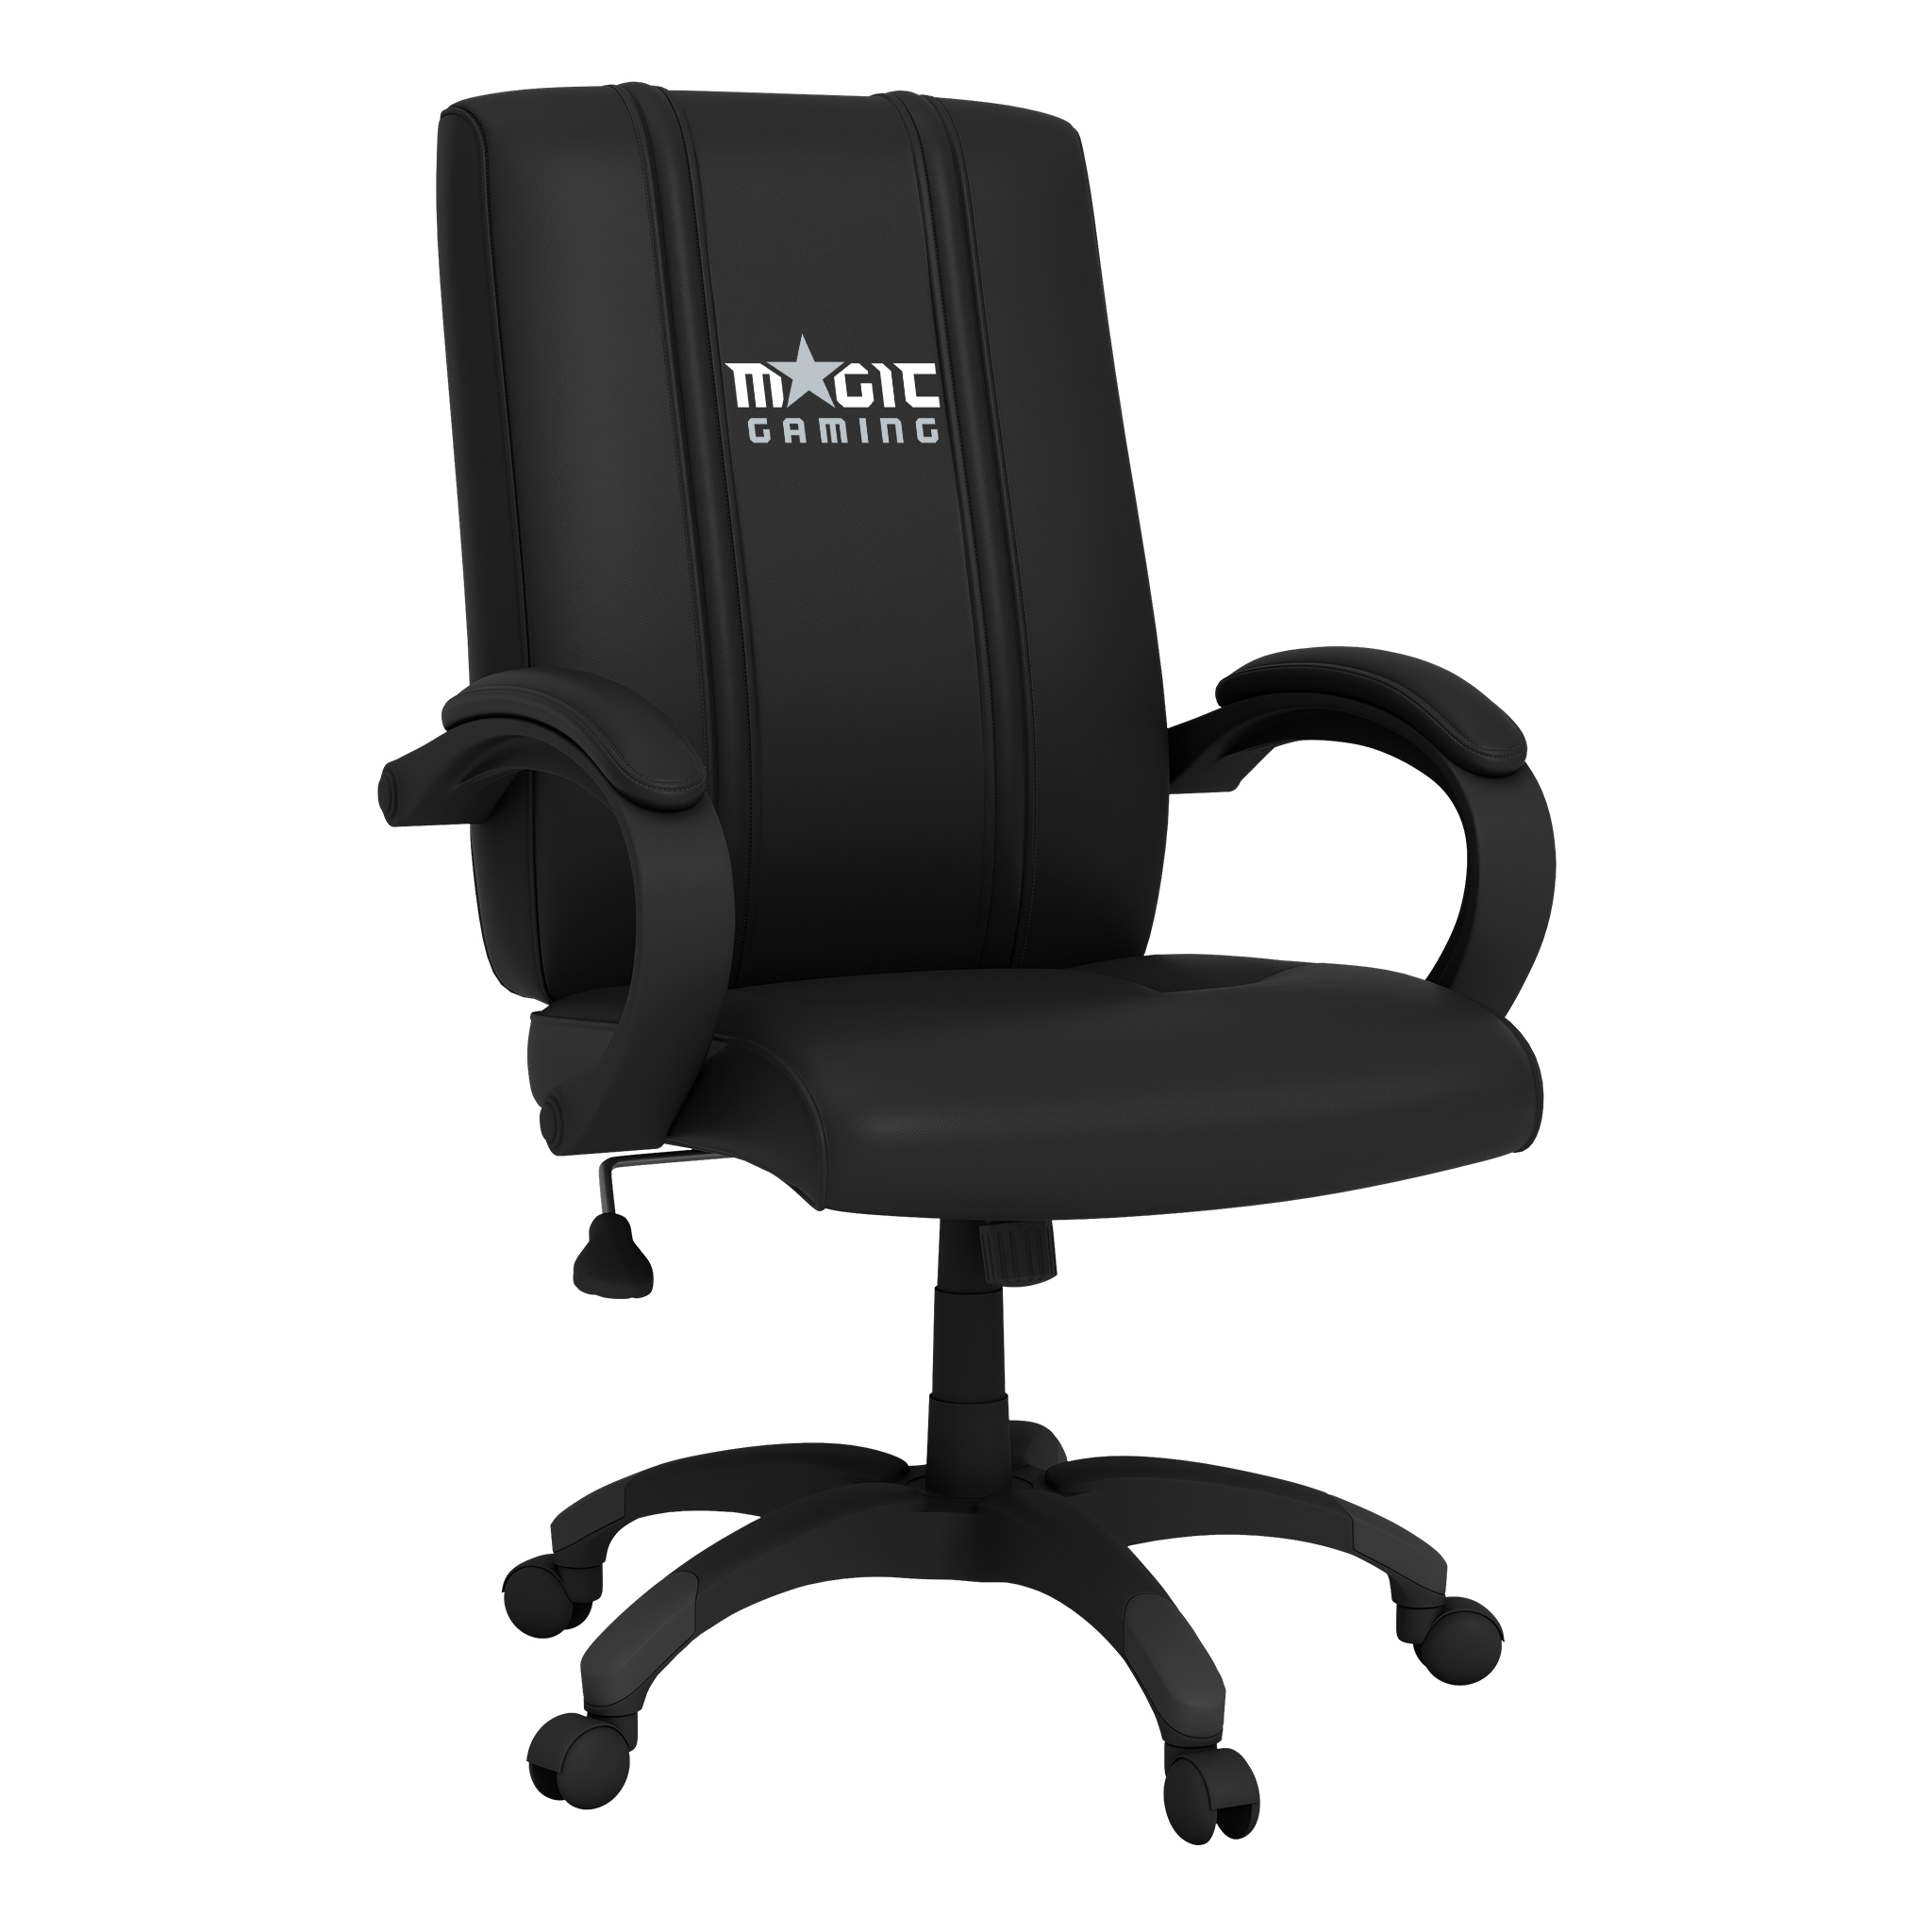 Orlando Magic Office Chair 1000 with Orlando Magic Gaming Logo